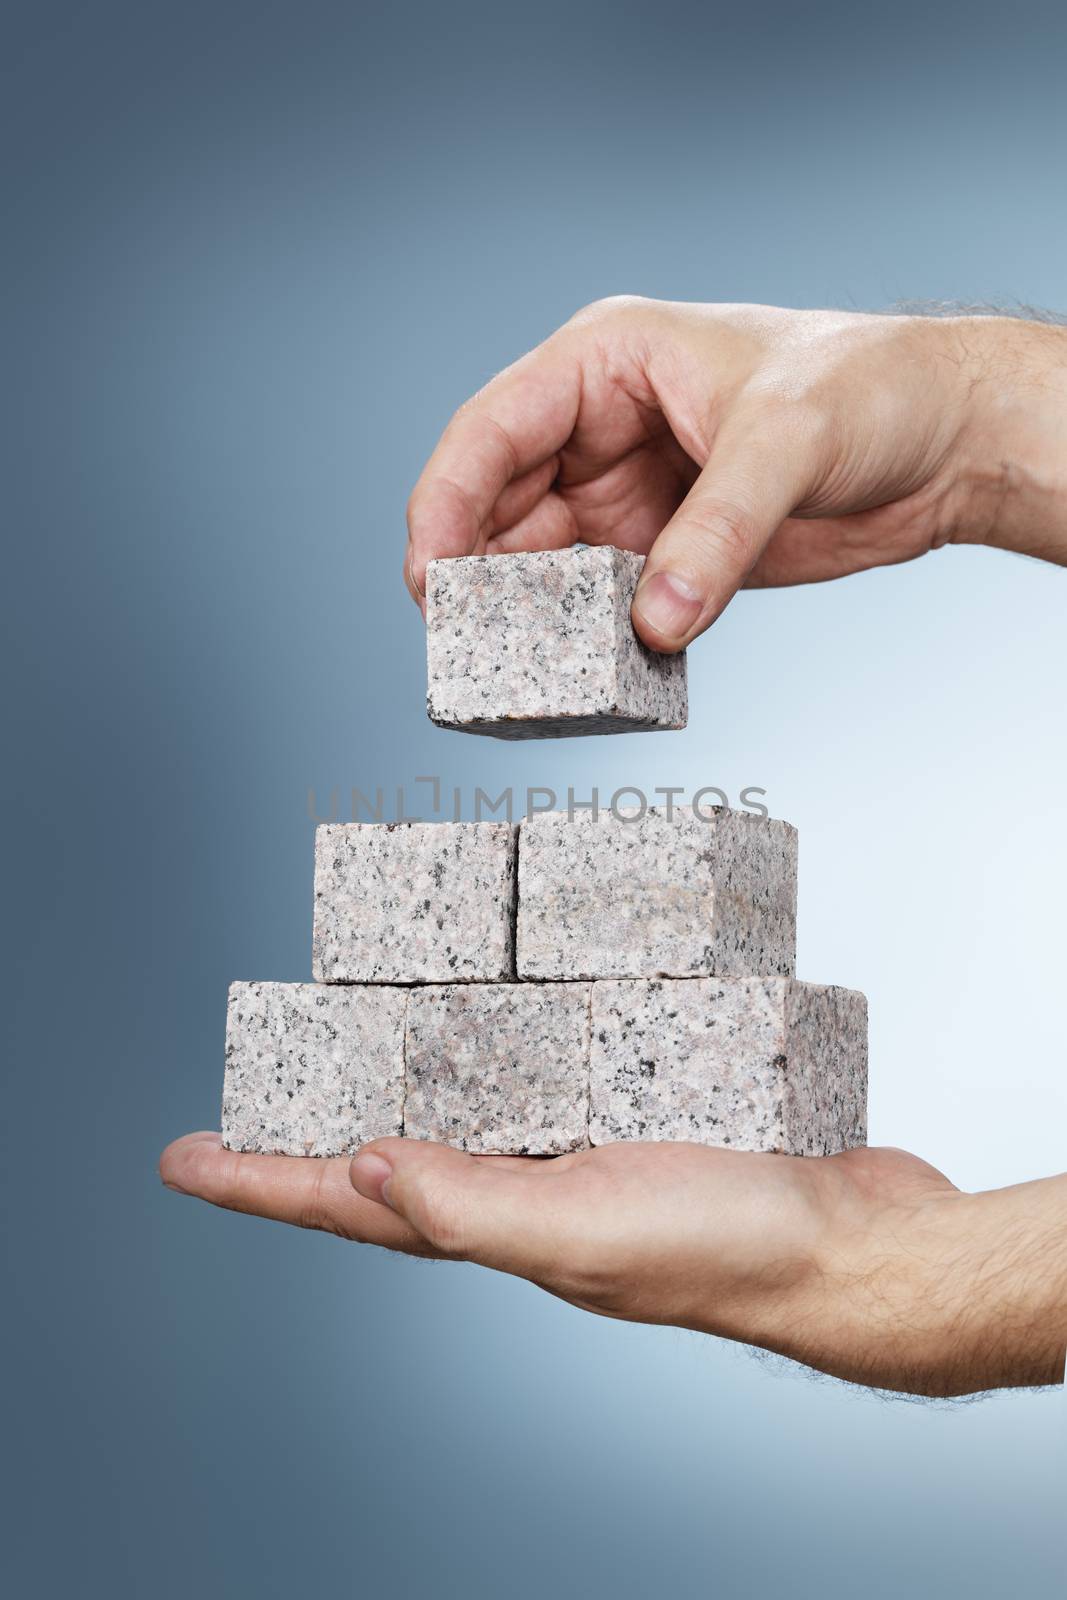 Man building a pyramid of granite rock blocks in his hands.